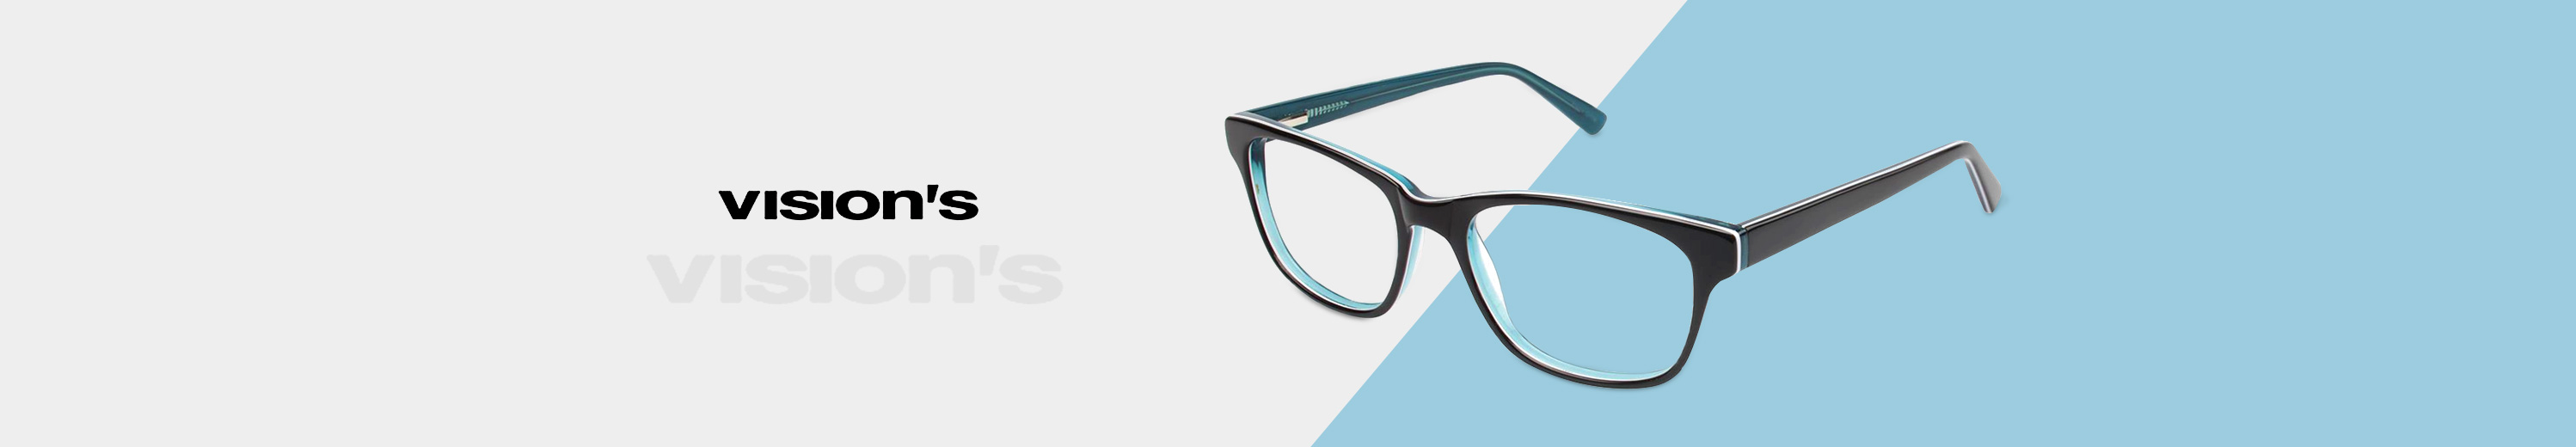 Vision's Secret Glasses and Eyewear